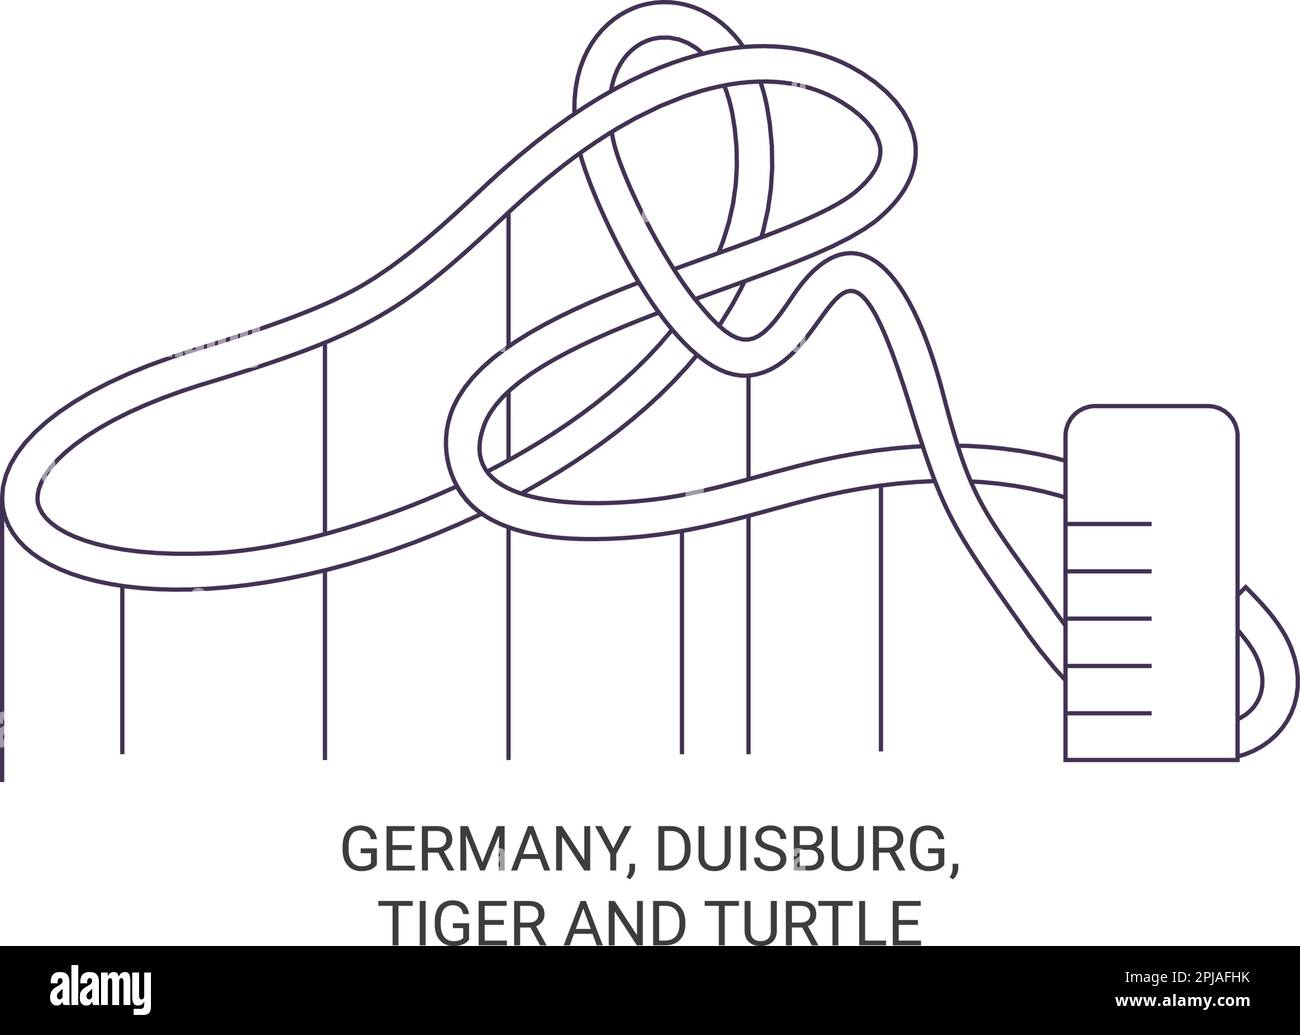 Germany, Duisburg, Tiger And Turtle travel landmark vector illustration Stock Vector